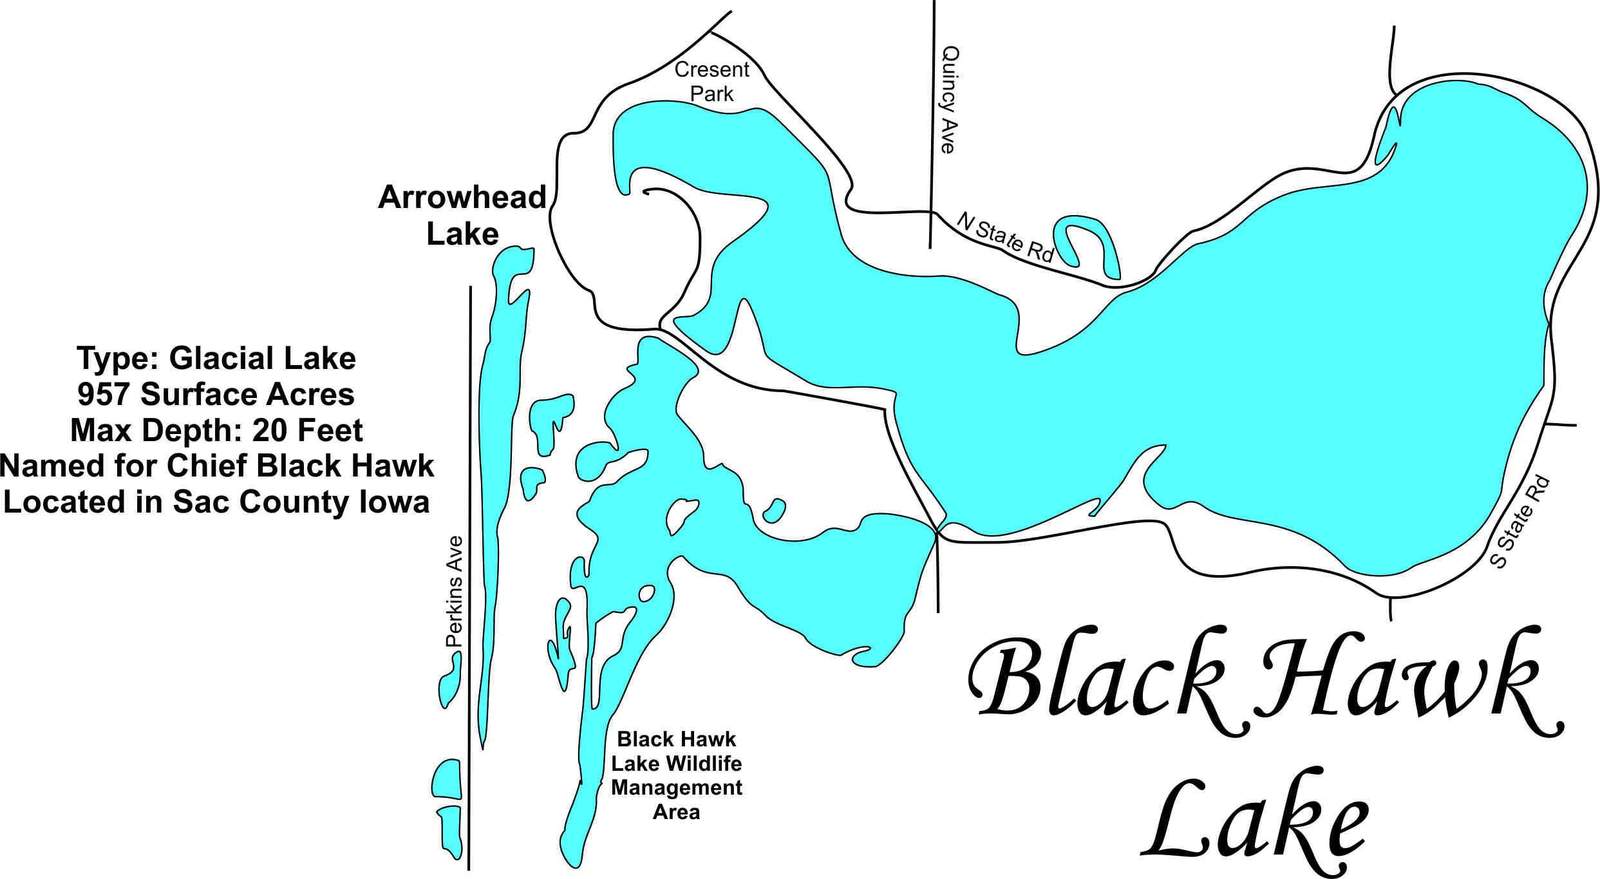 Black Hawk Lake, IA - Laser Cut Wood Map - $86.50 - $695.50